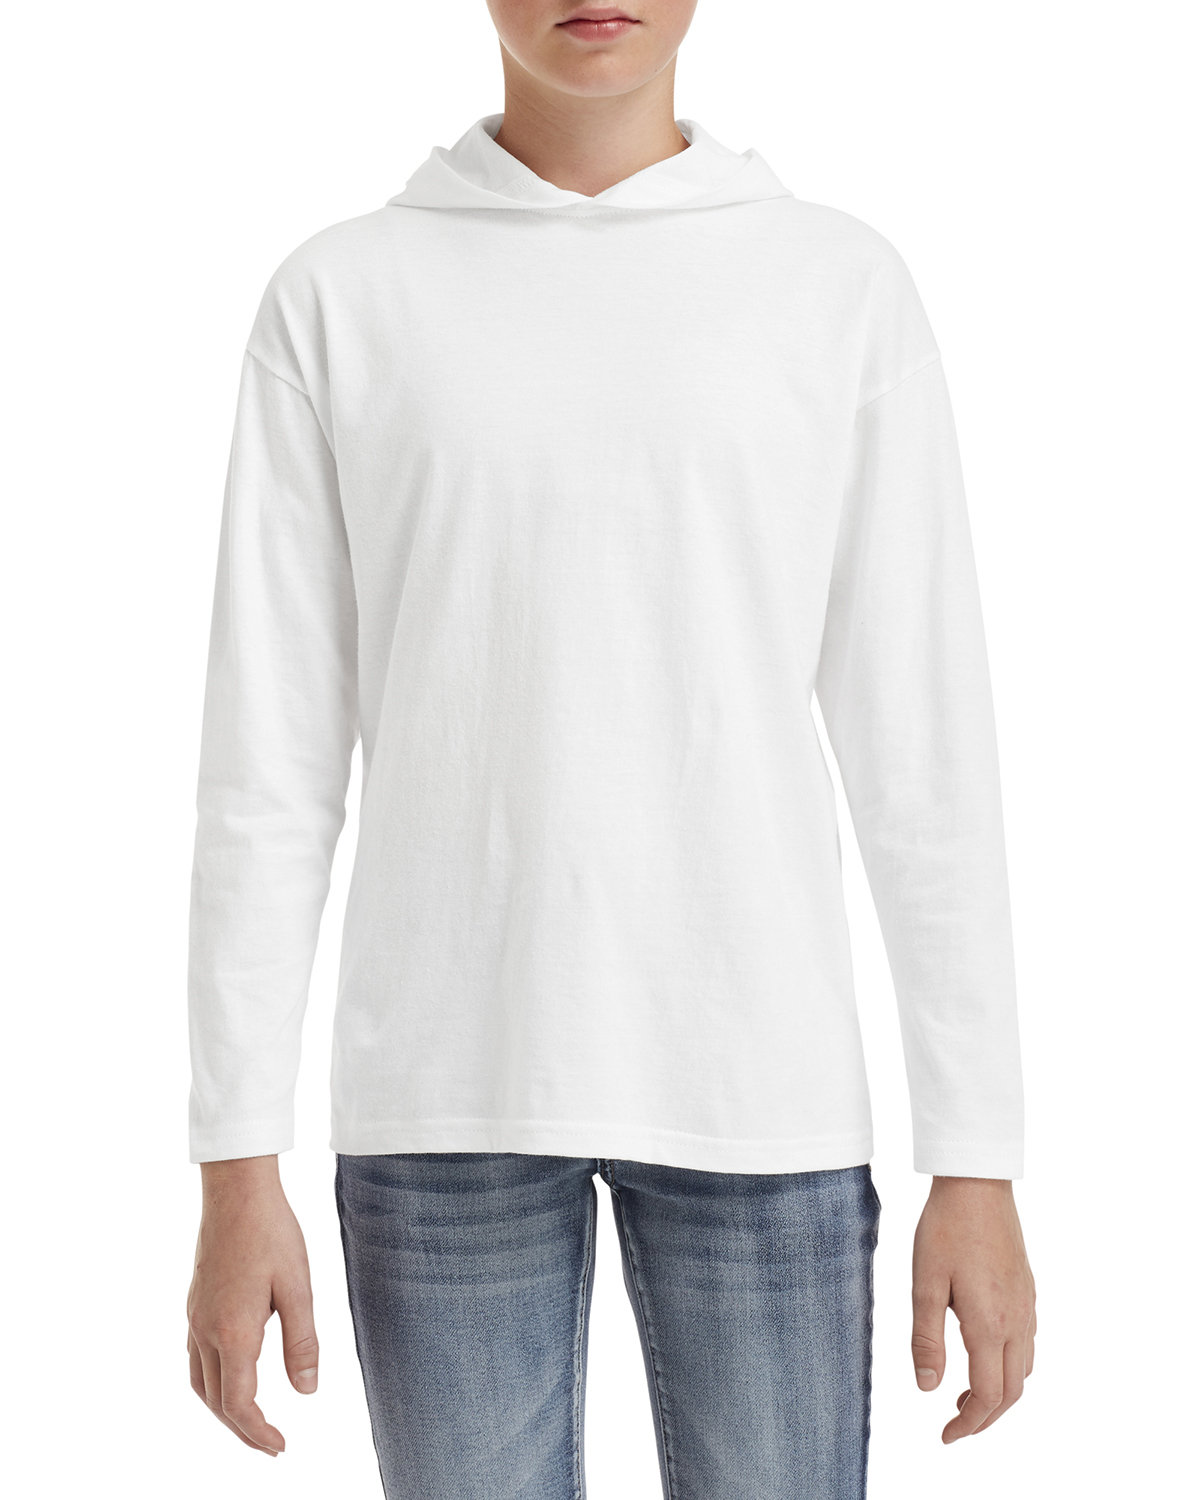 987B Anvil Youth Long-Sleeve Hooded/ T-Shirt